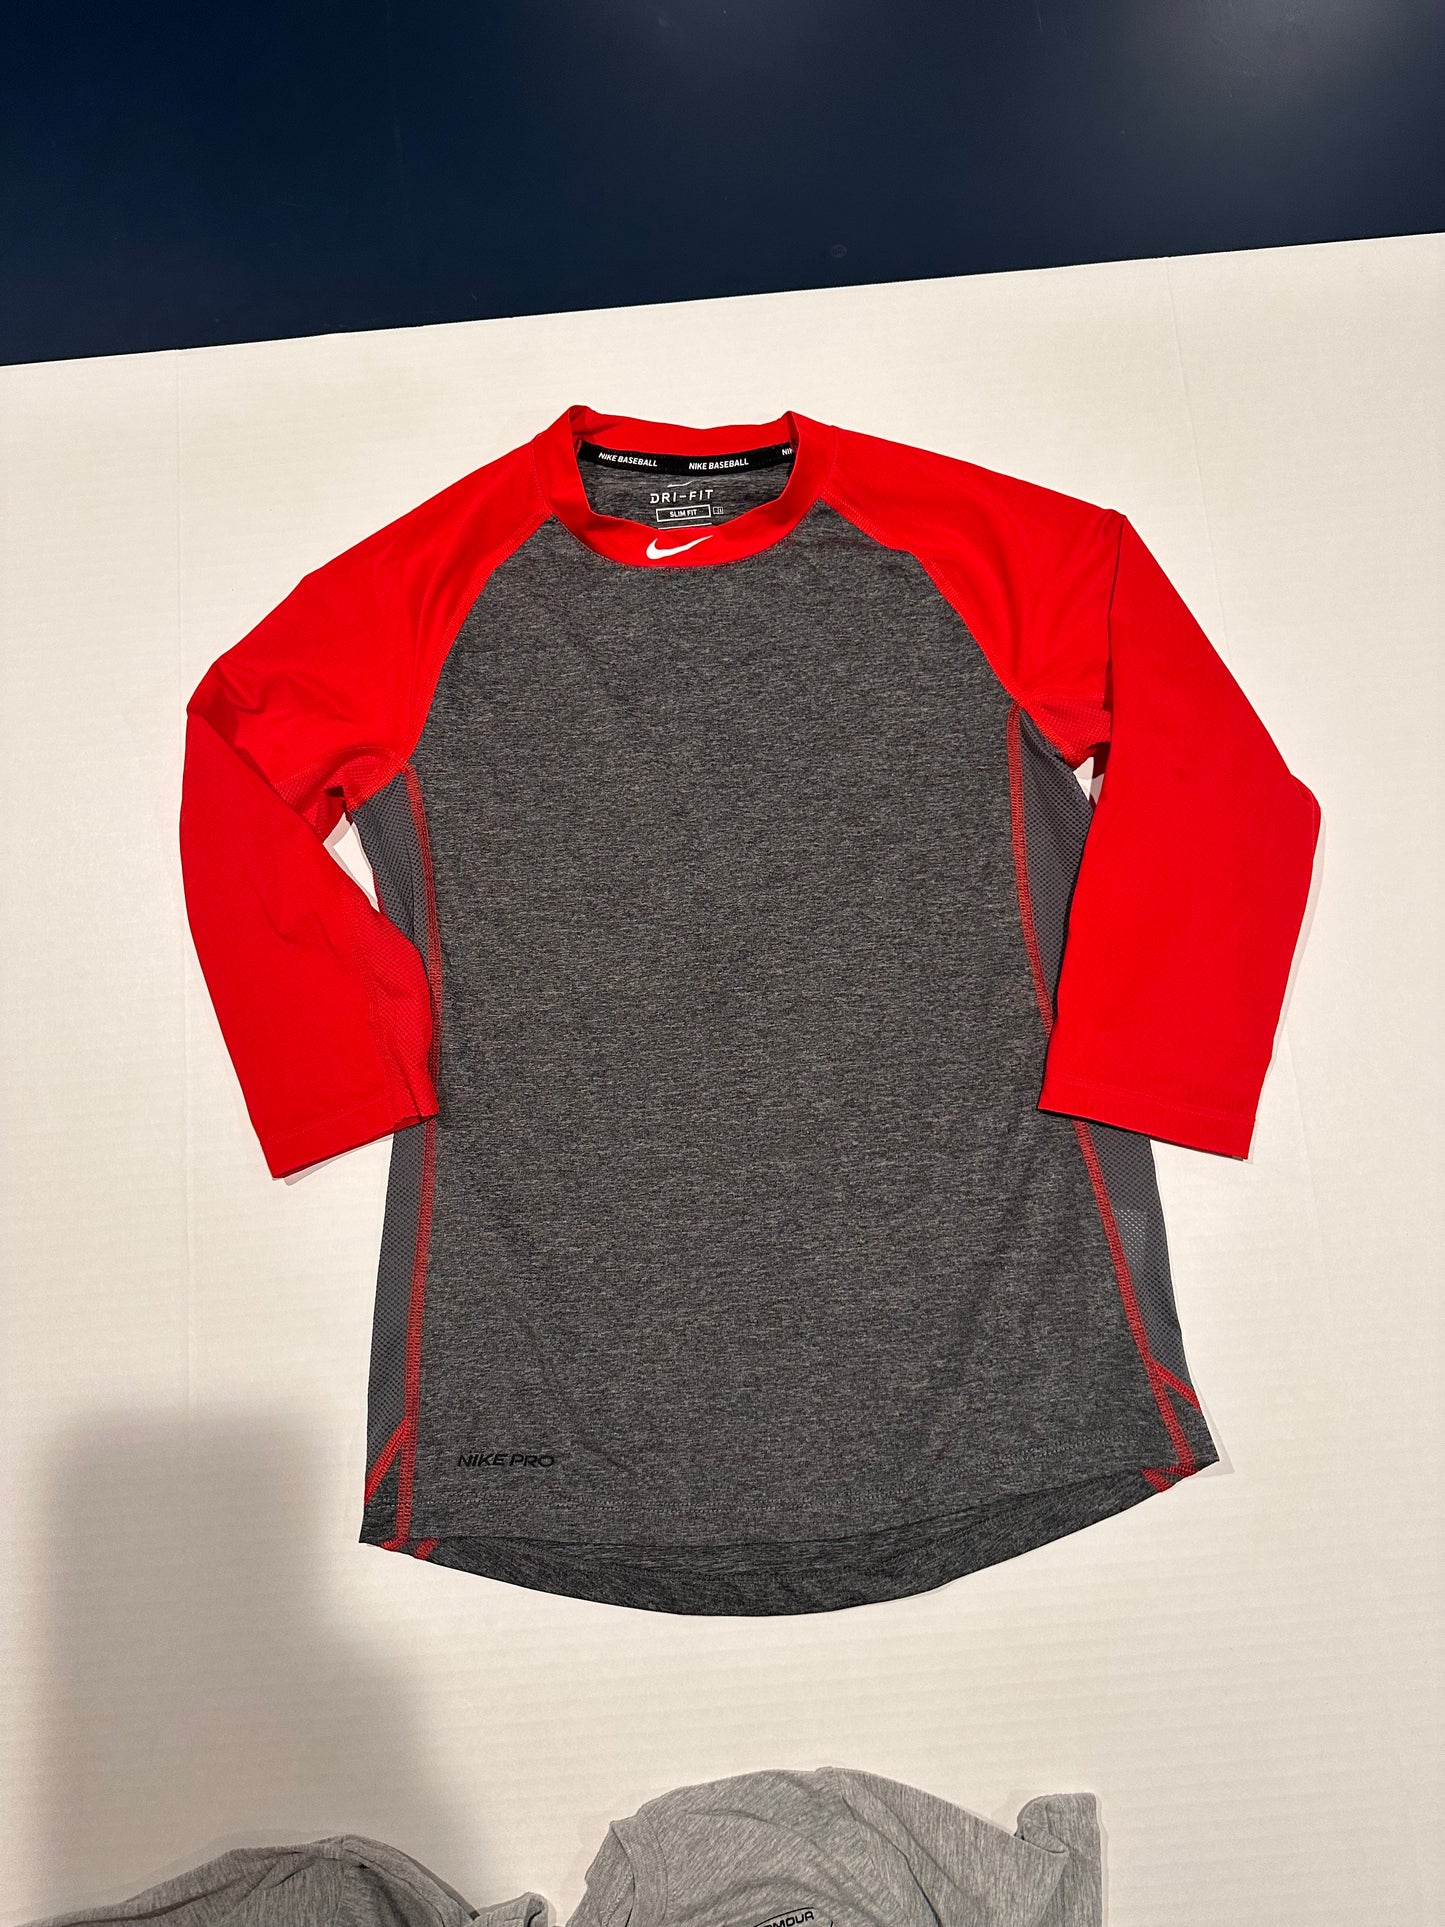 Nike b boys baseball performance shirt red and grey size large